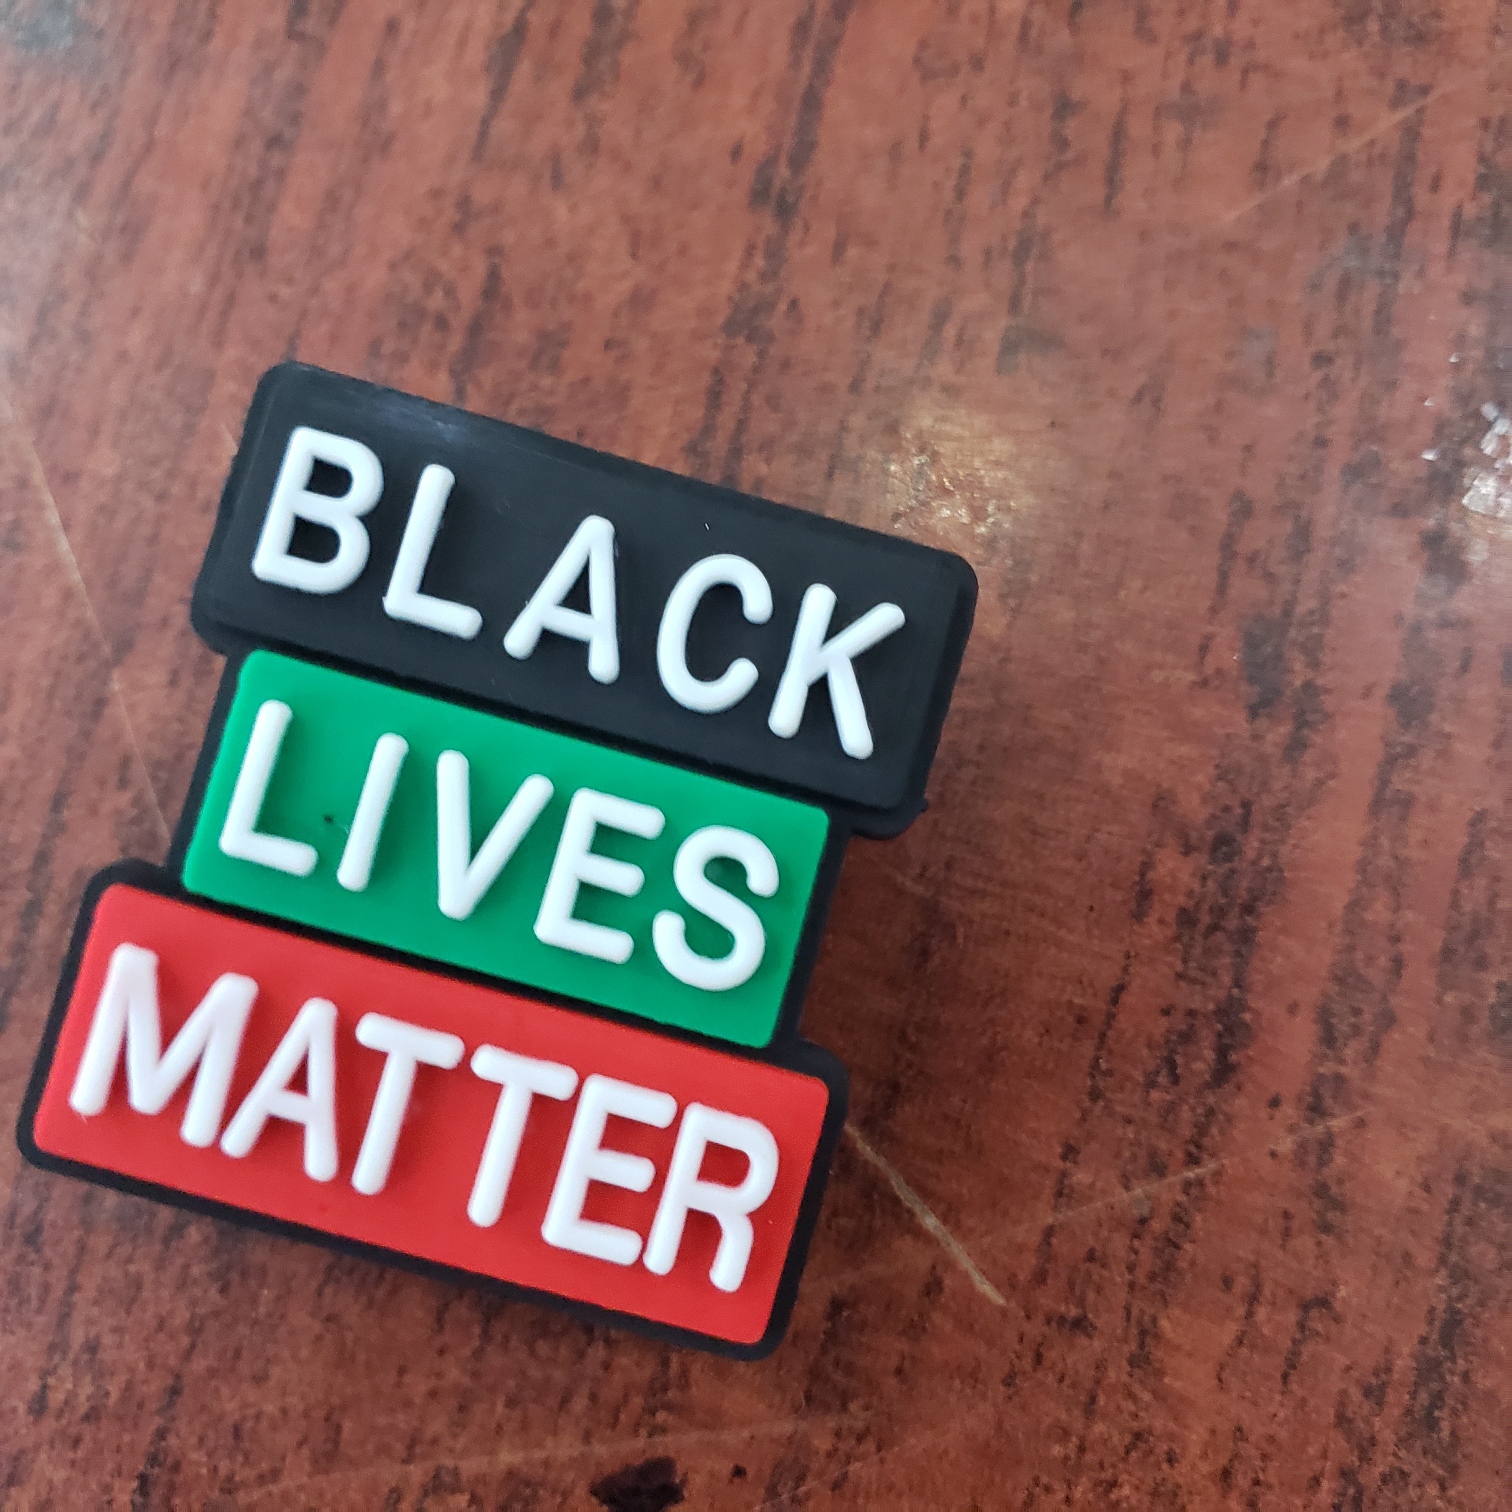 Black life matters